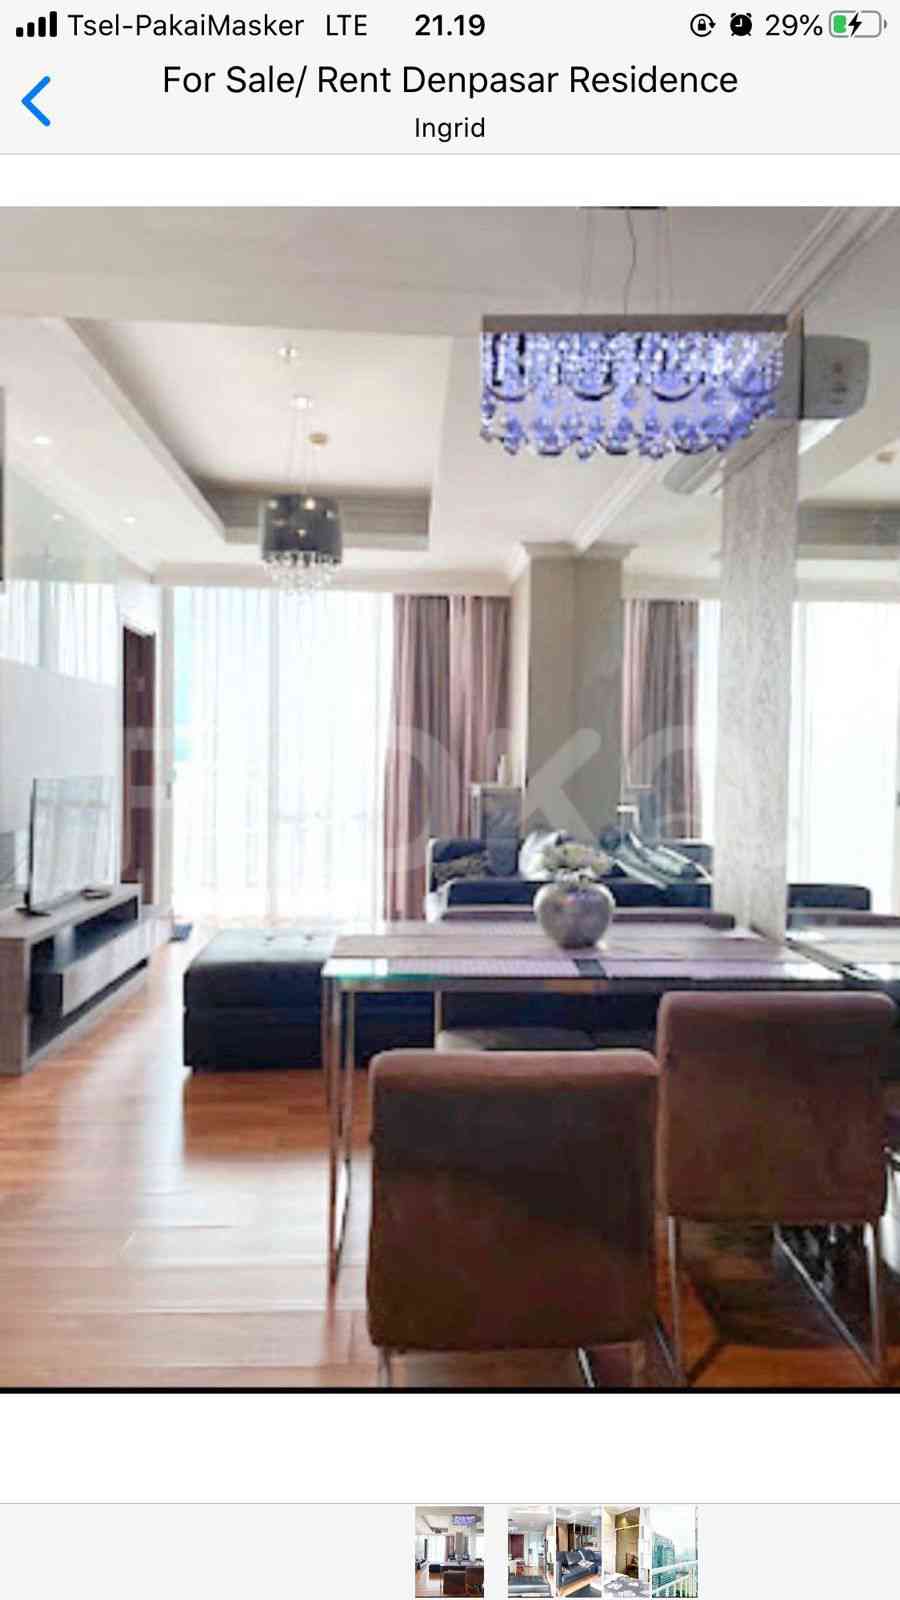 2 Bedroom on 16th Floor for Rent in Kuningan City (Denpasar Residence)  - fkua0b 2